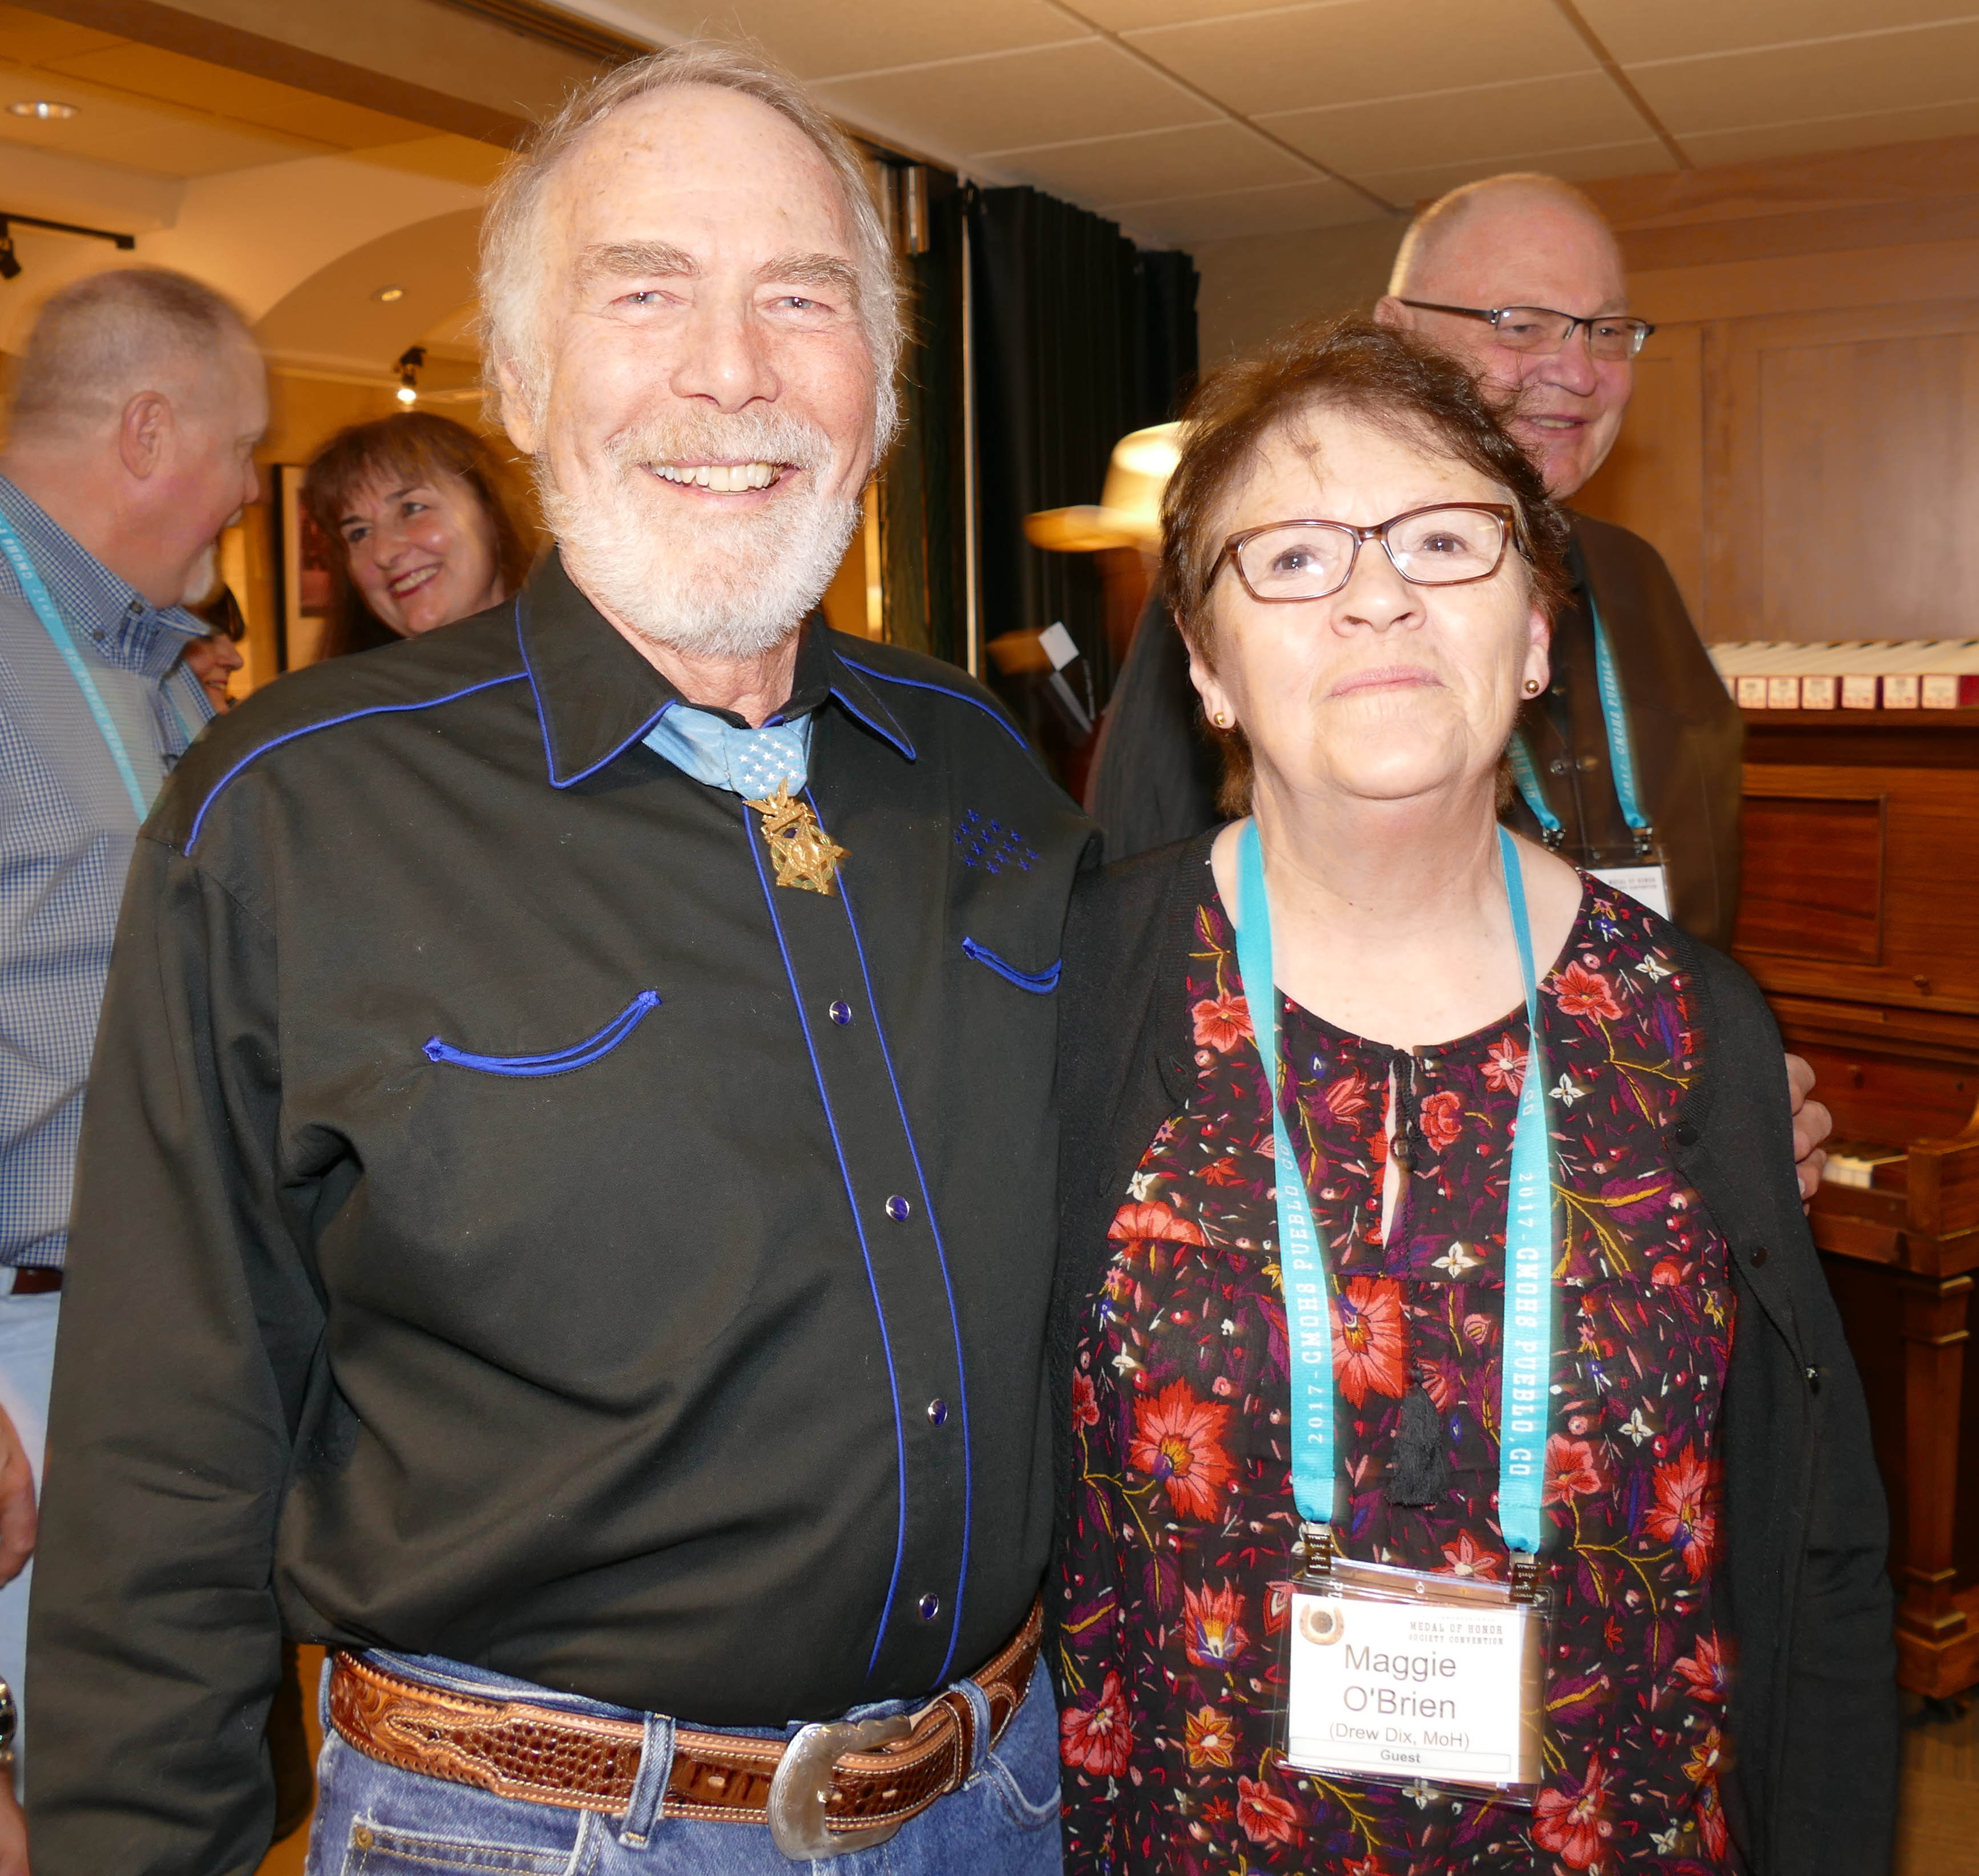 Pueblo's own MOH recipient Drew Dix with Maggie O'Brien, a